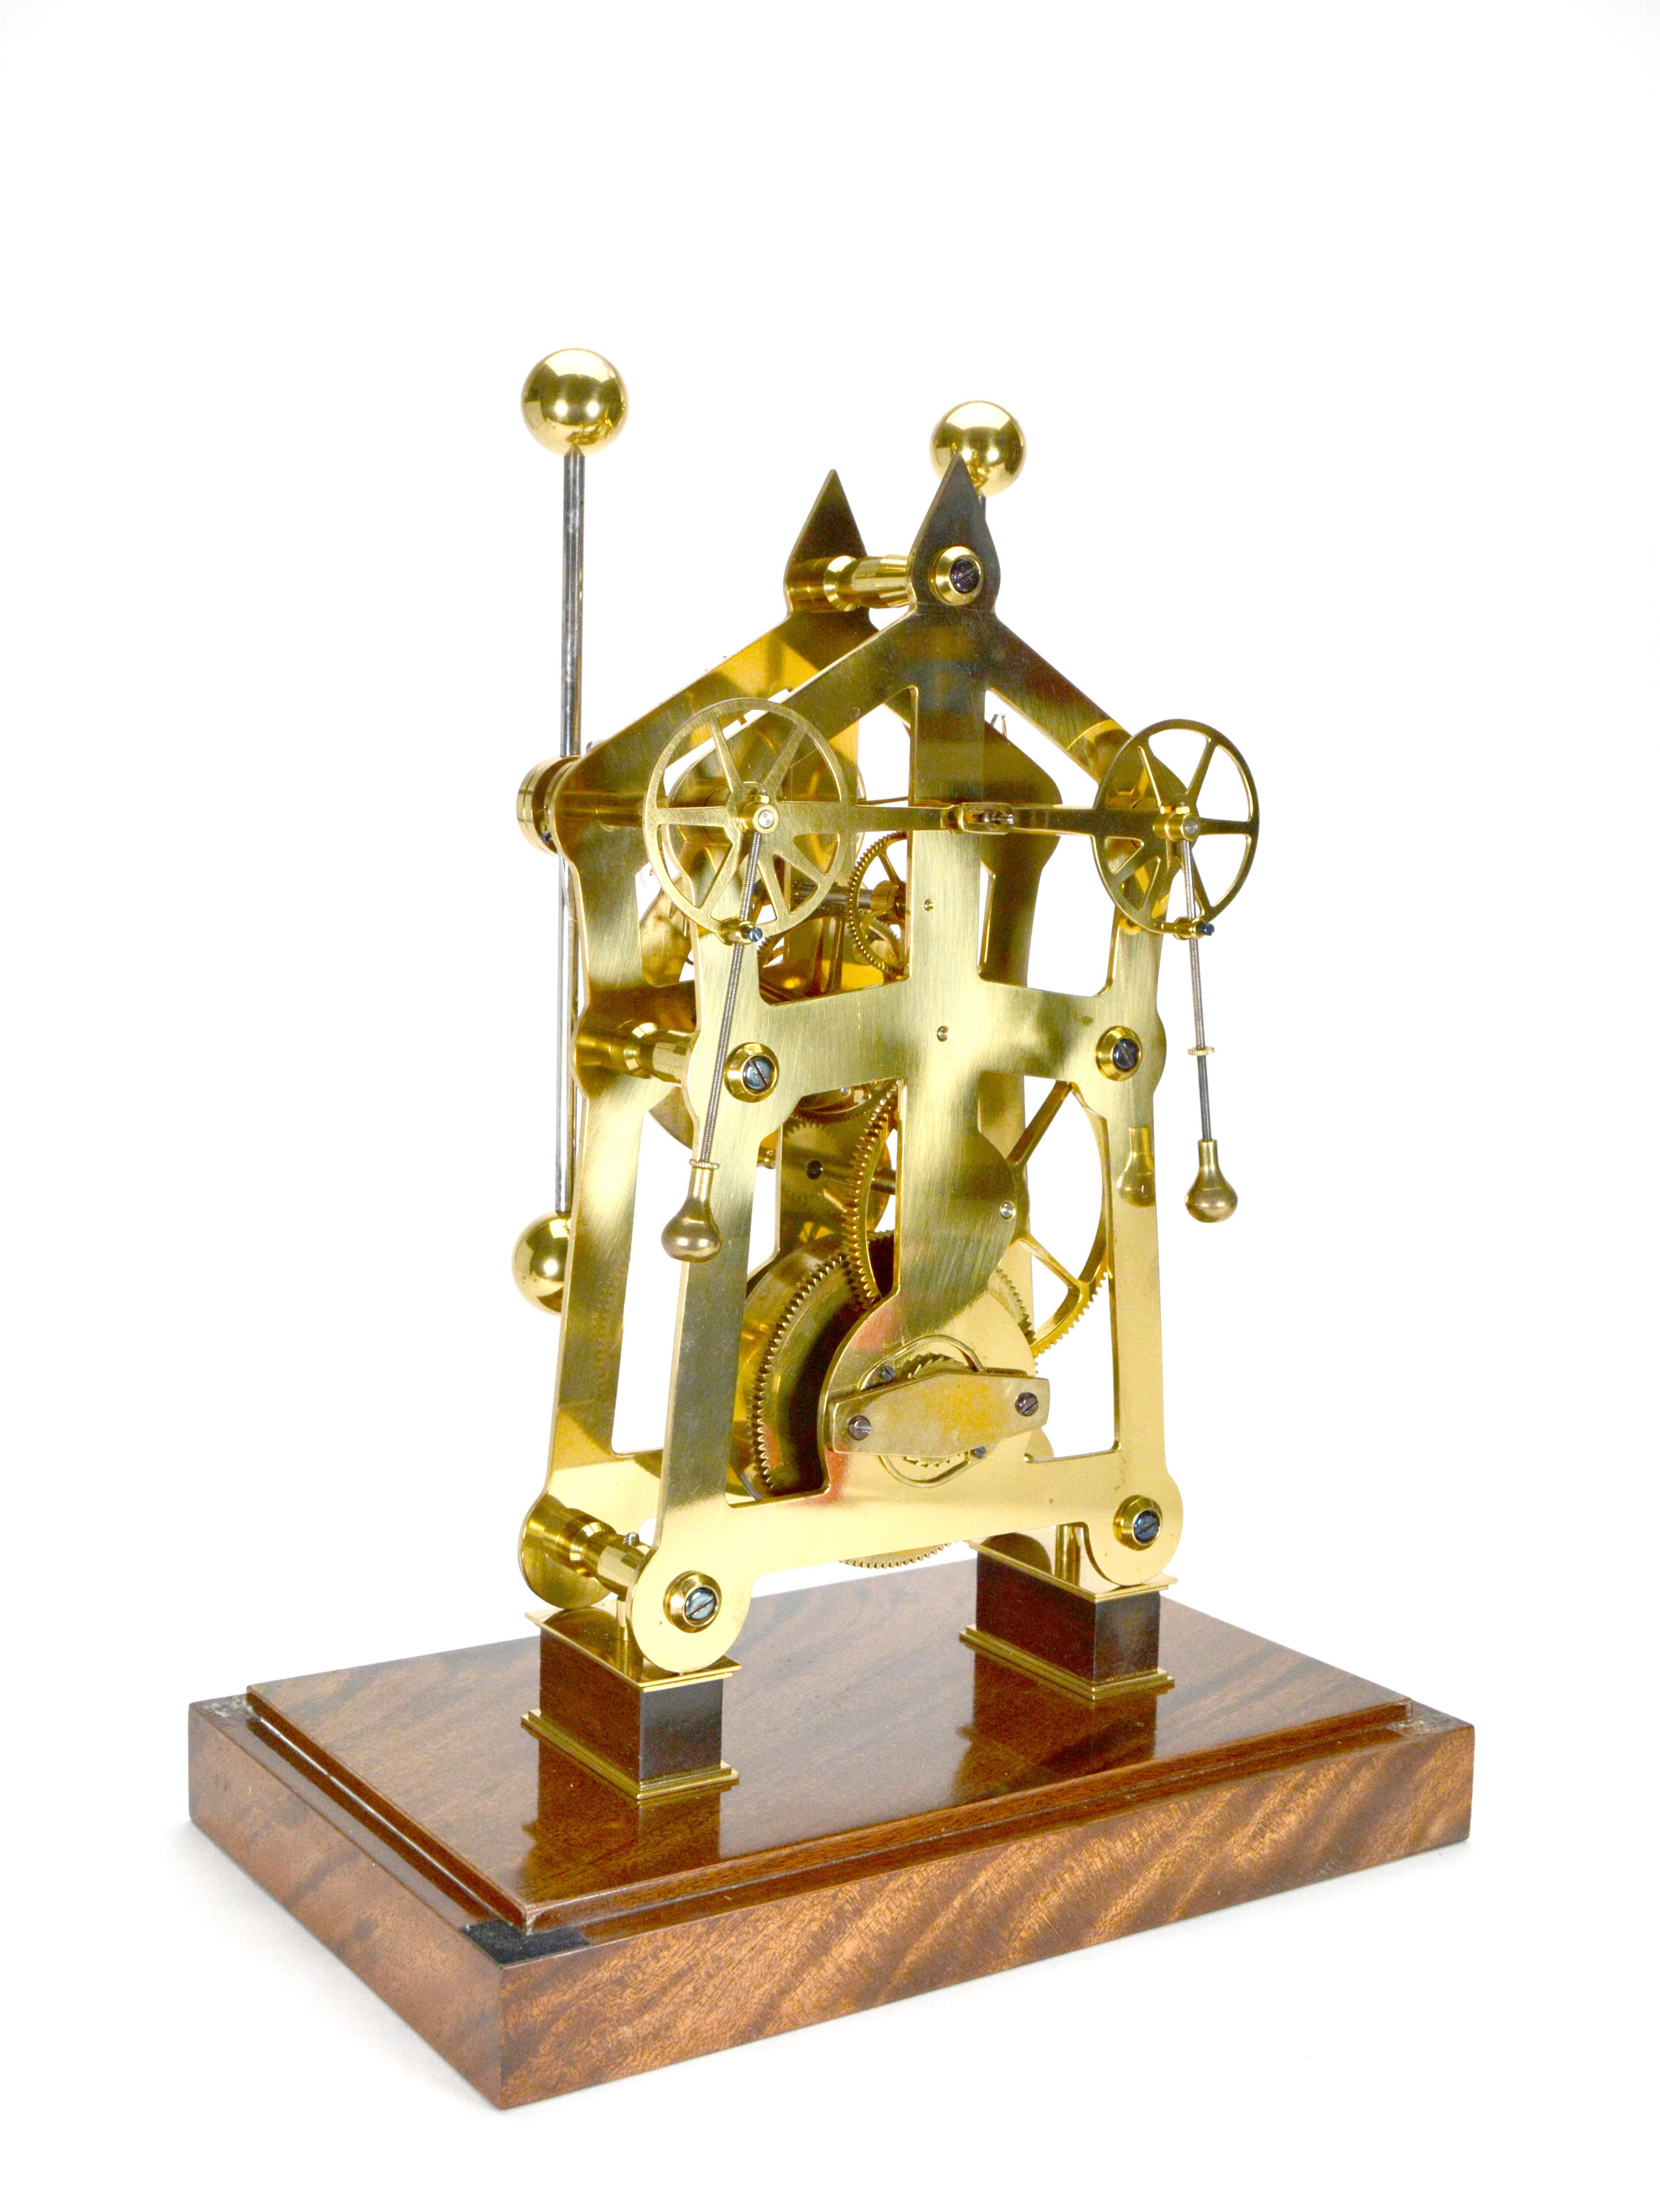 British English Sinclair Harding Harrison Grasshopper Double Pendulum Sea Skeleton Clock For Sale